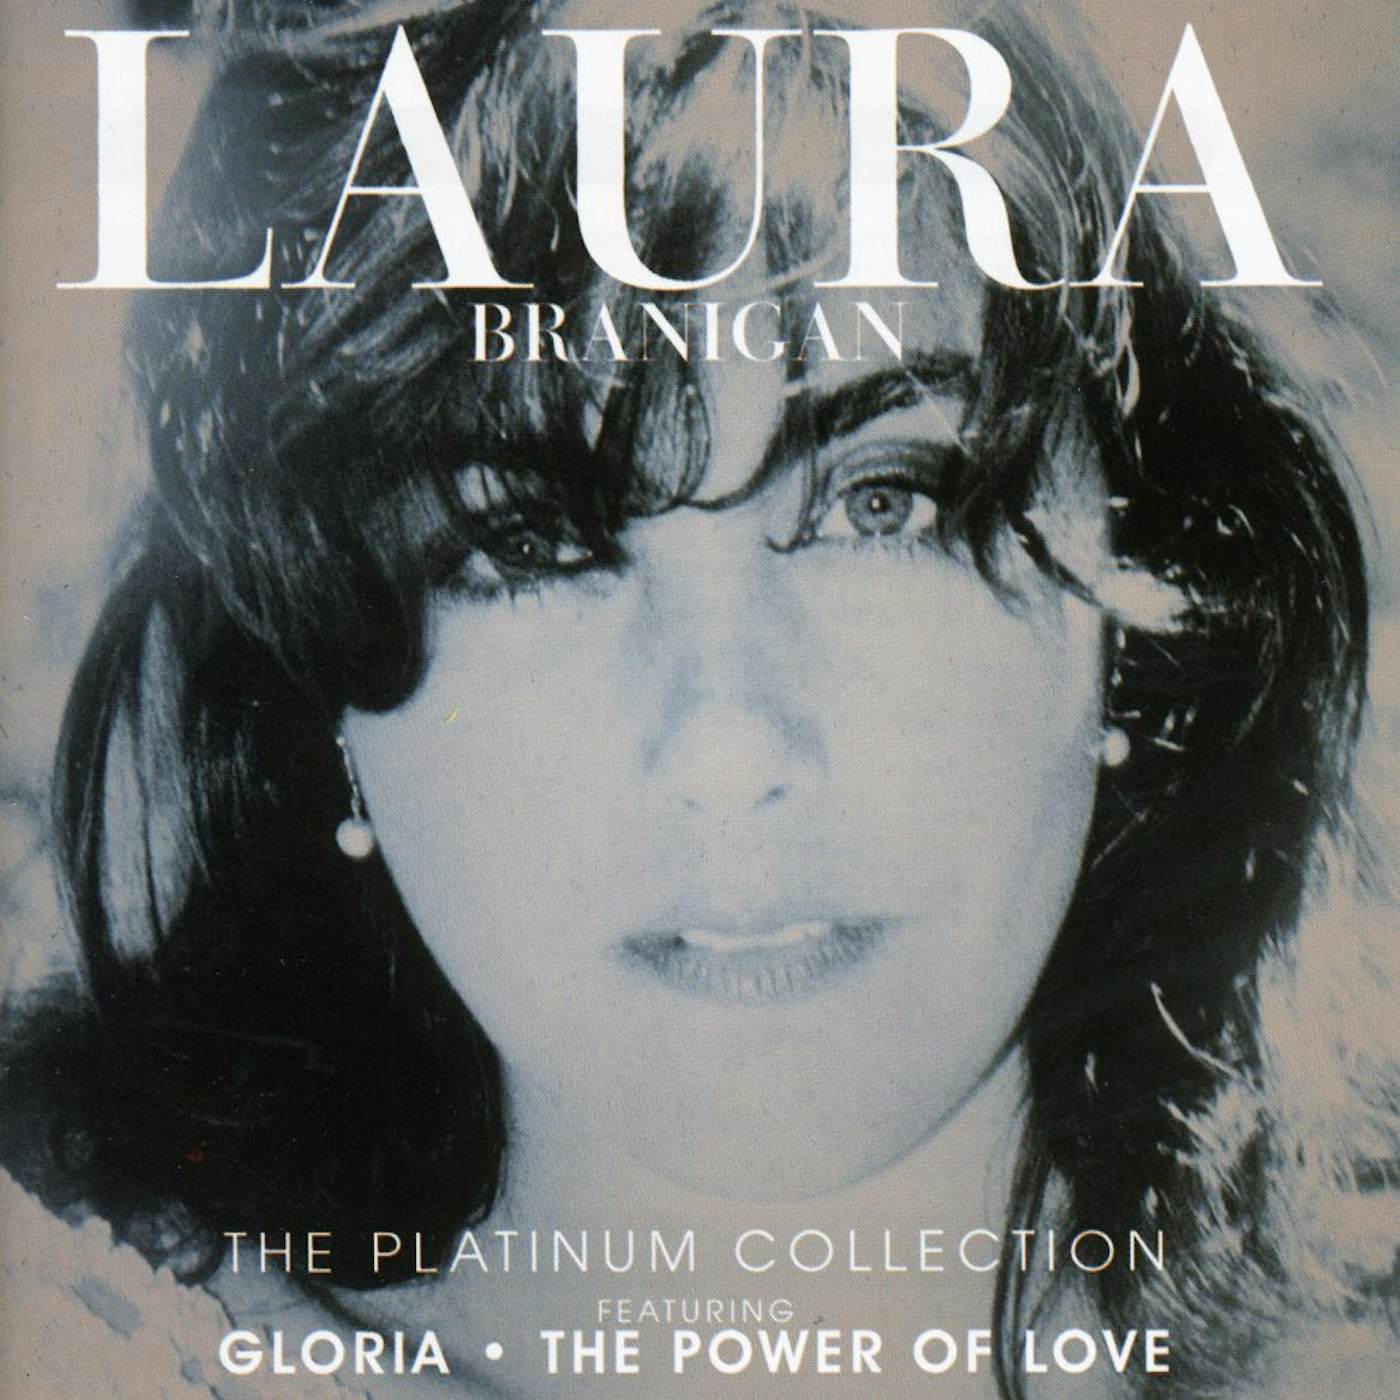 Laura Branigan Lyrics, Songs, and Albums